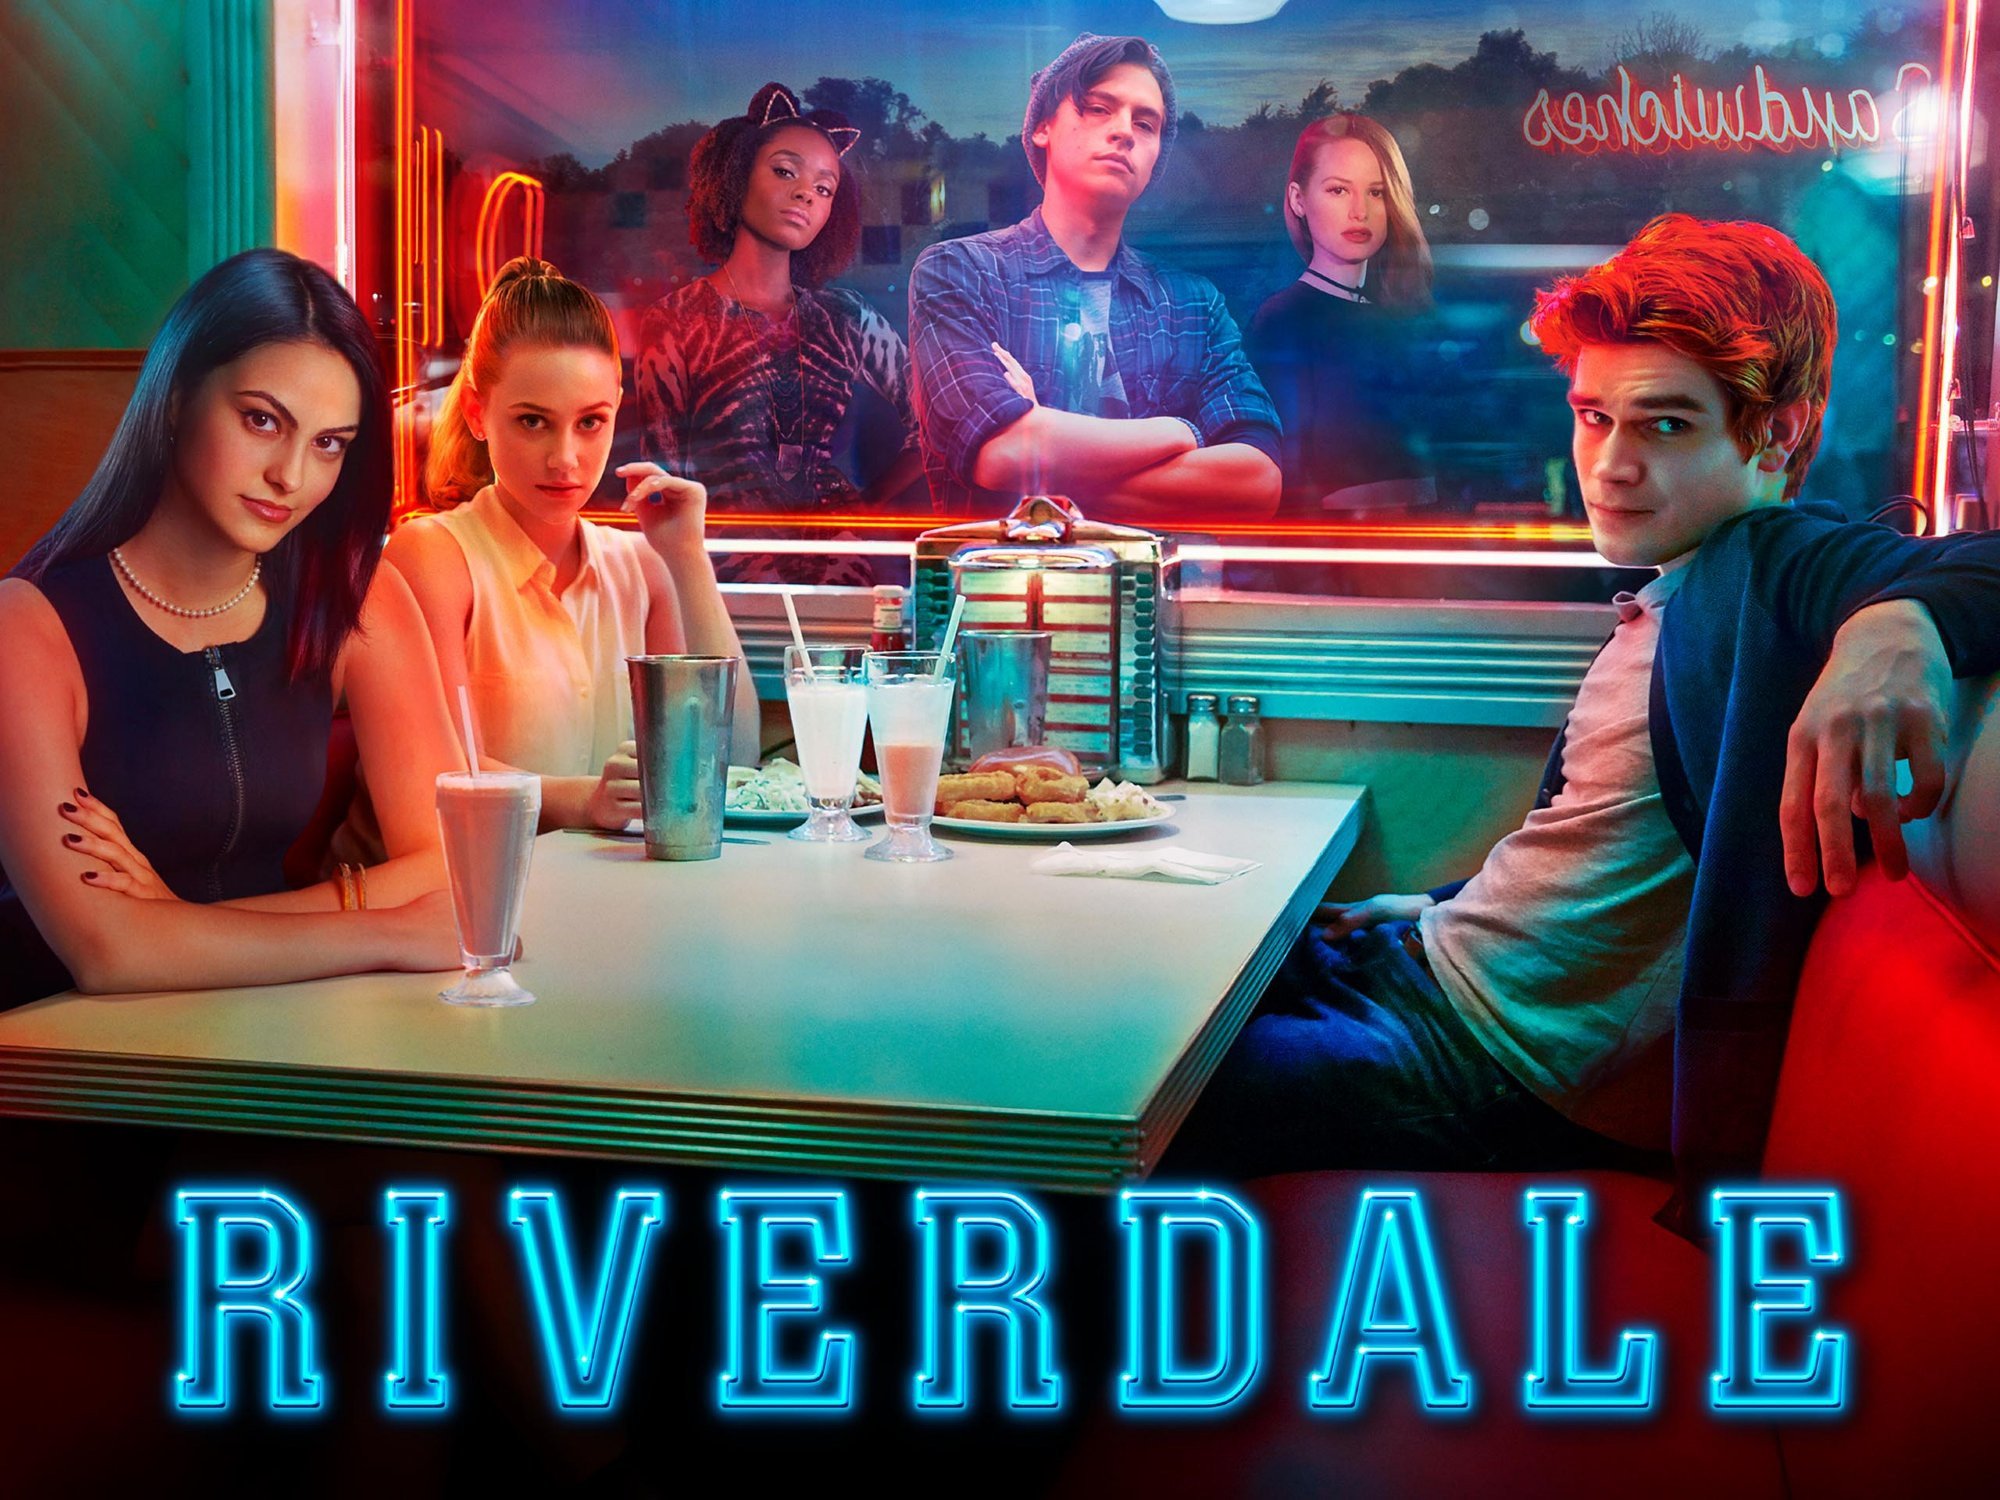 riverdale season 1 complete download torrent